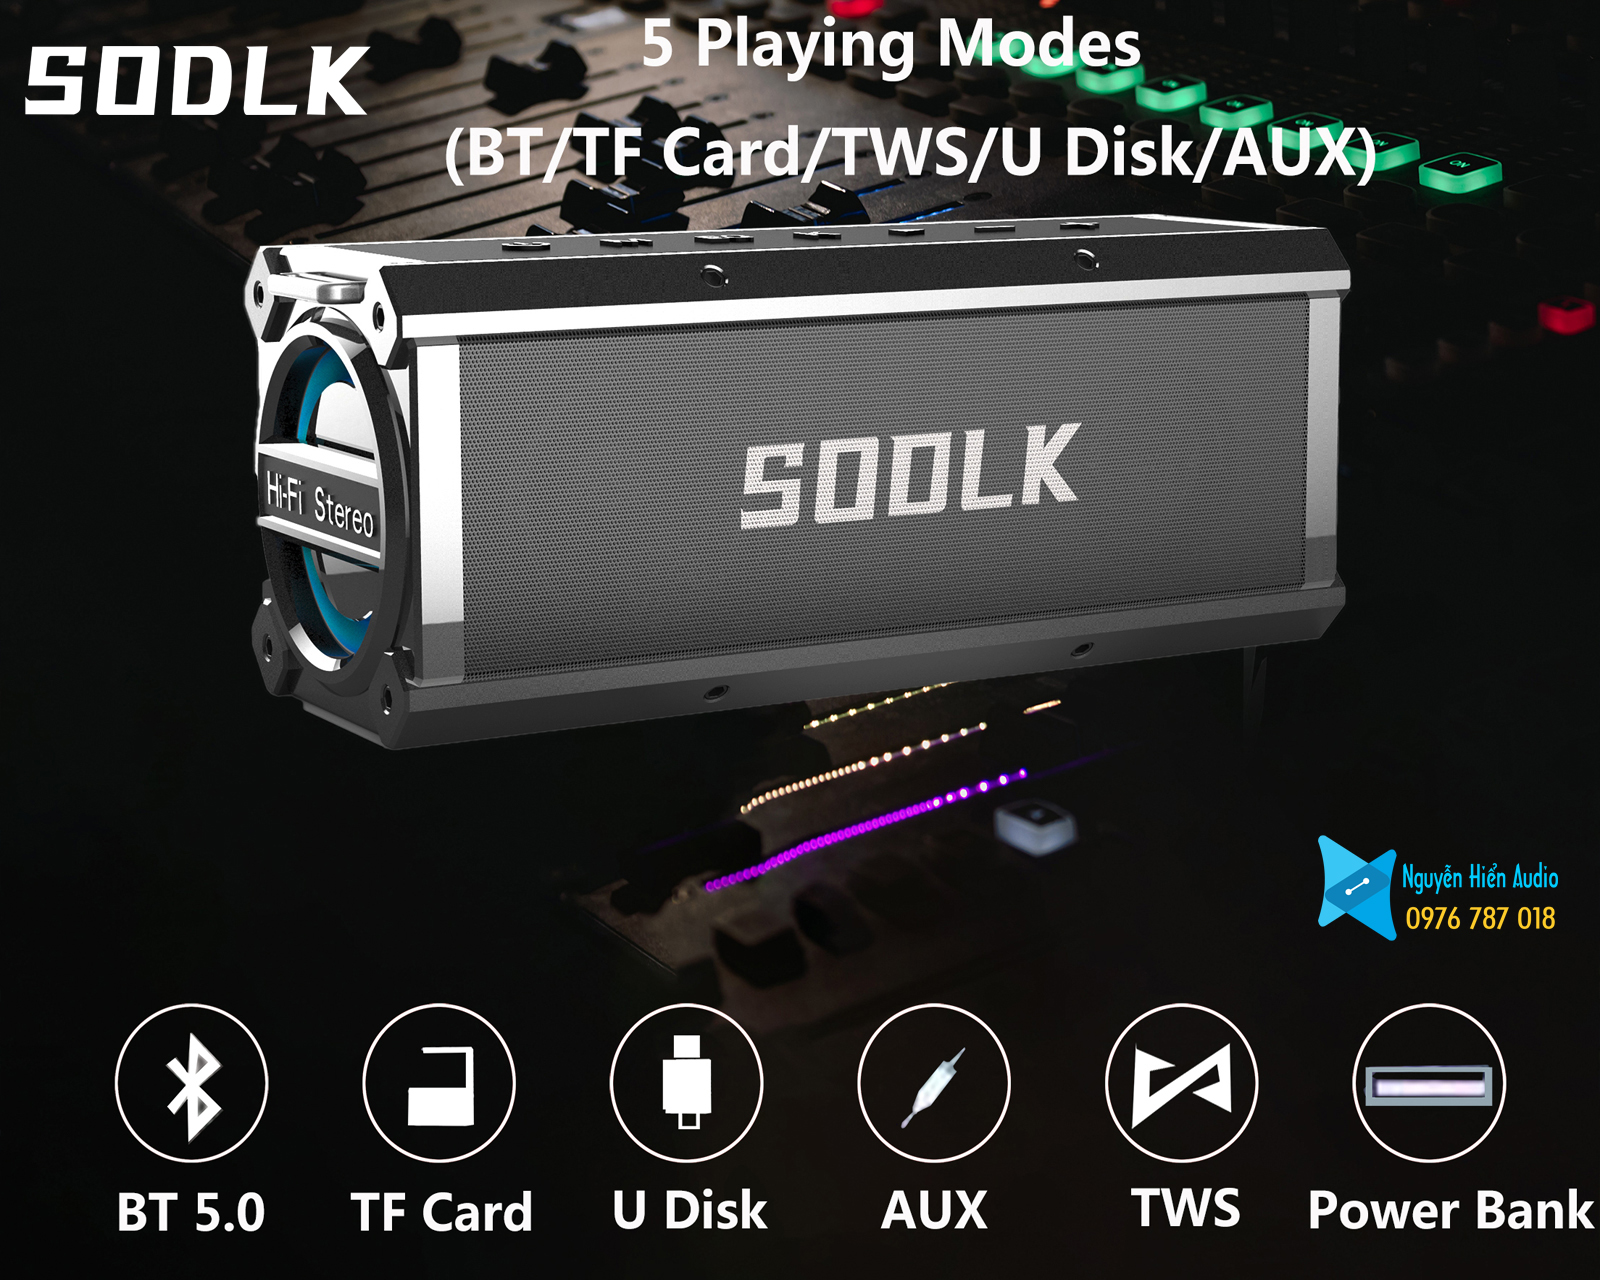 Loa SODLK T200plus bluetooth 5.0 siêu trầm 120W, karaoke chuyên nghiệp, đèn RGB